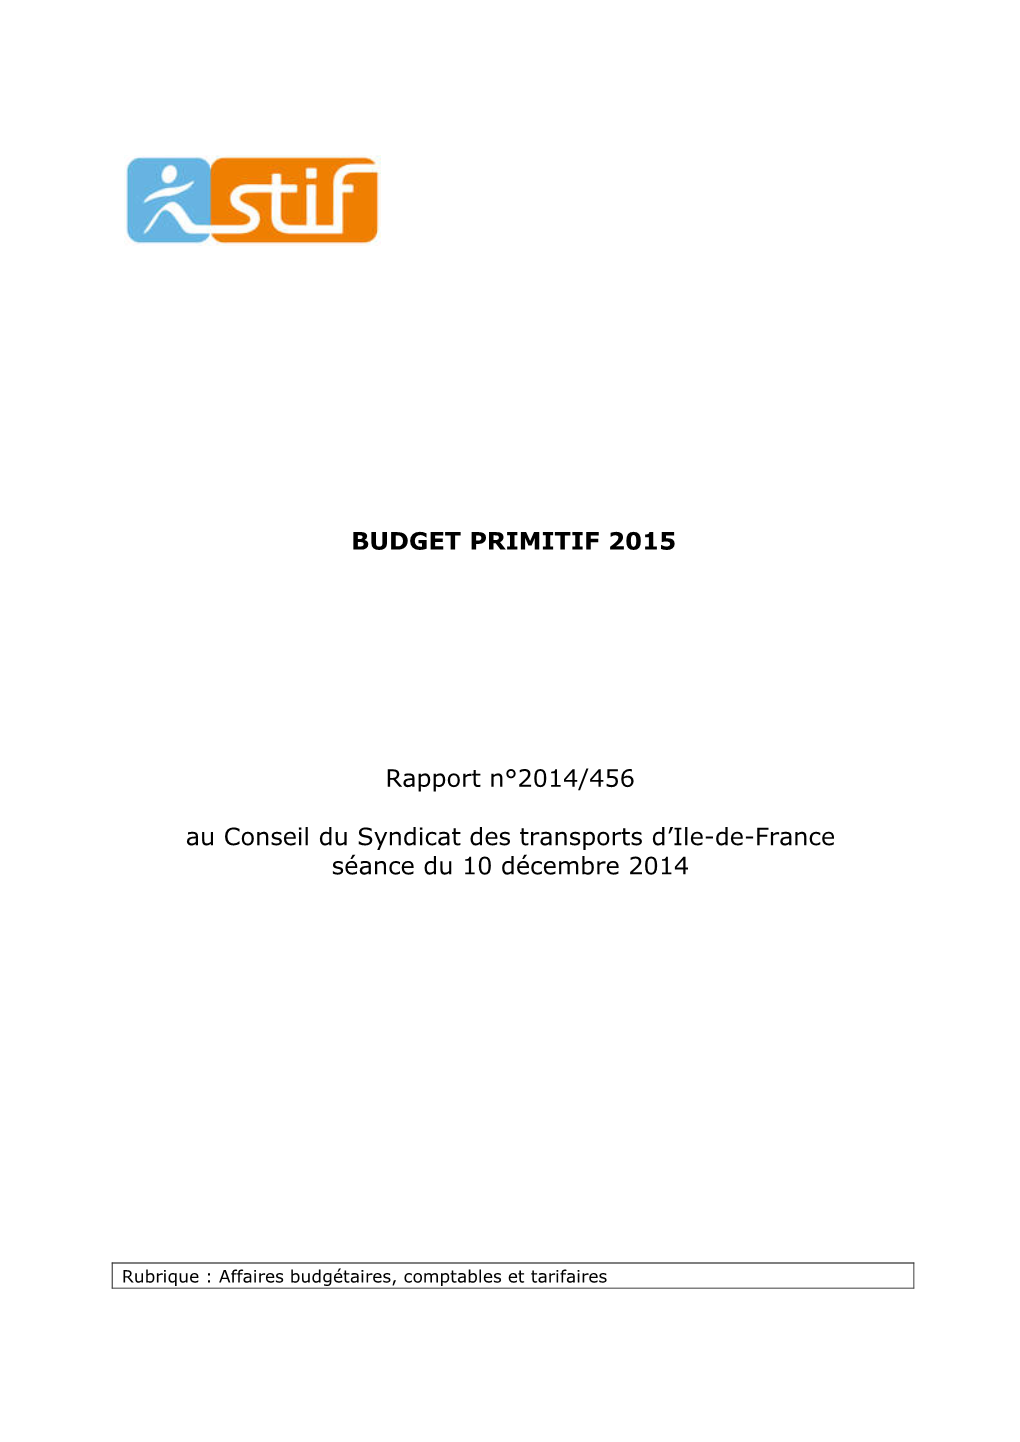 Budget Primitif 2008